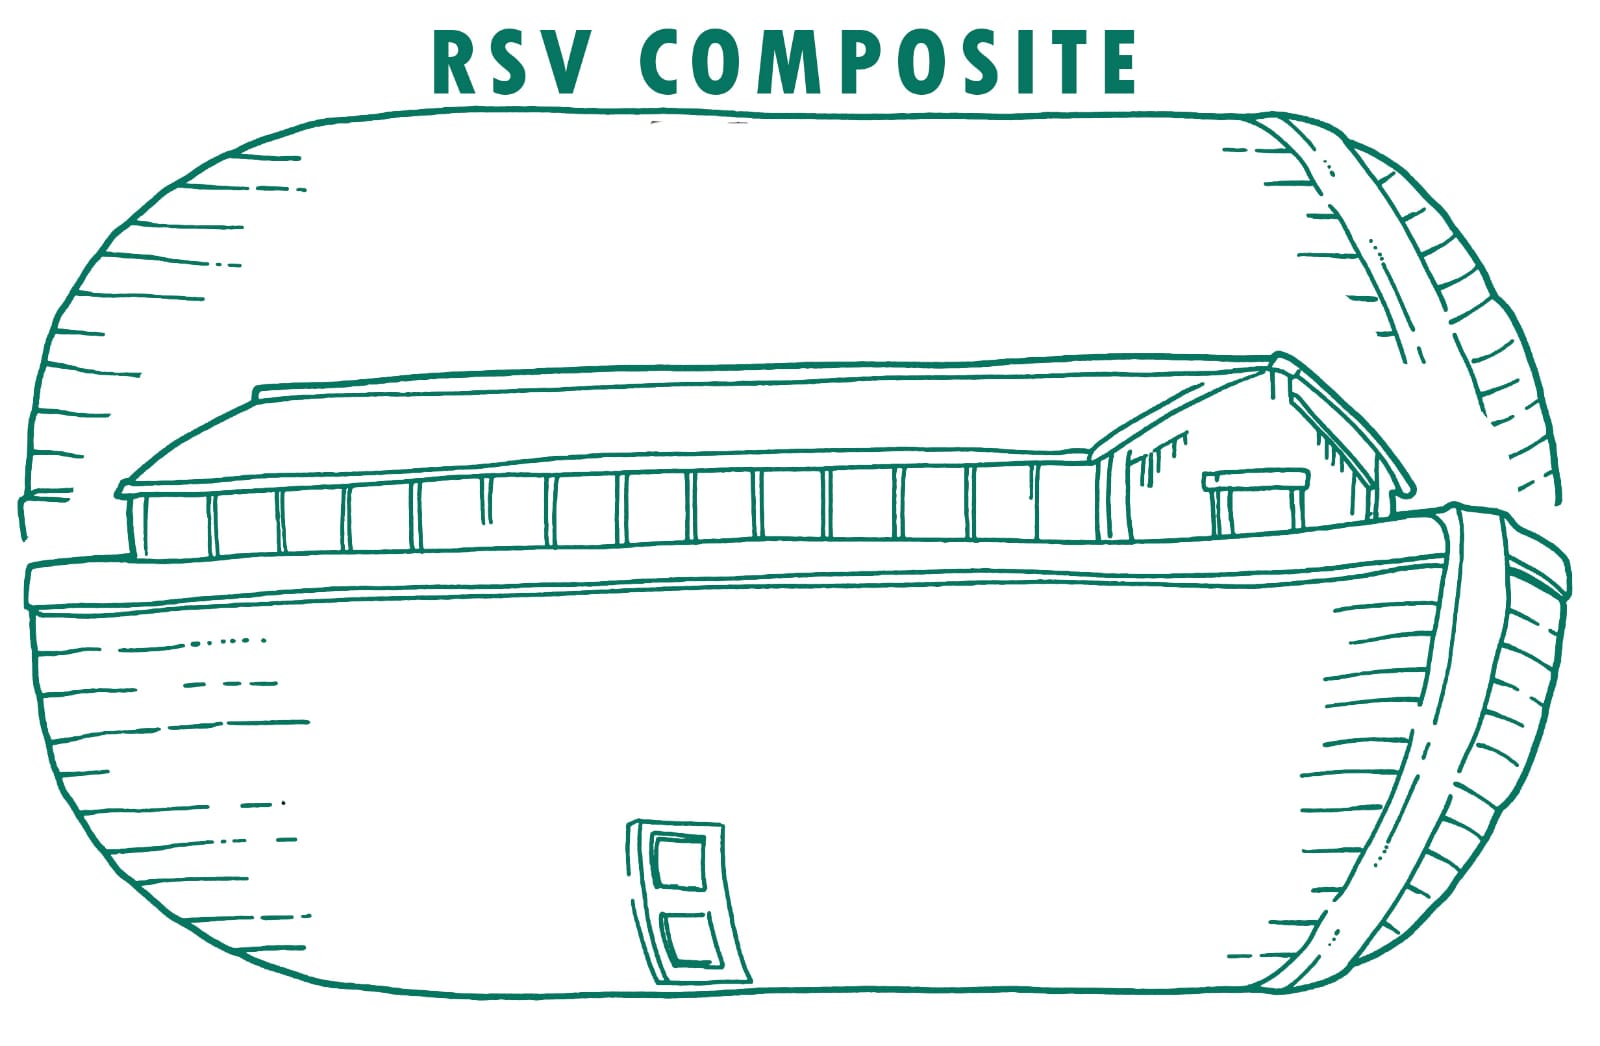 RSV Composite